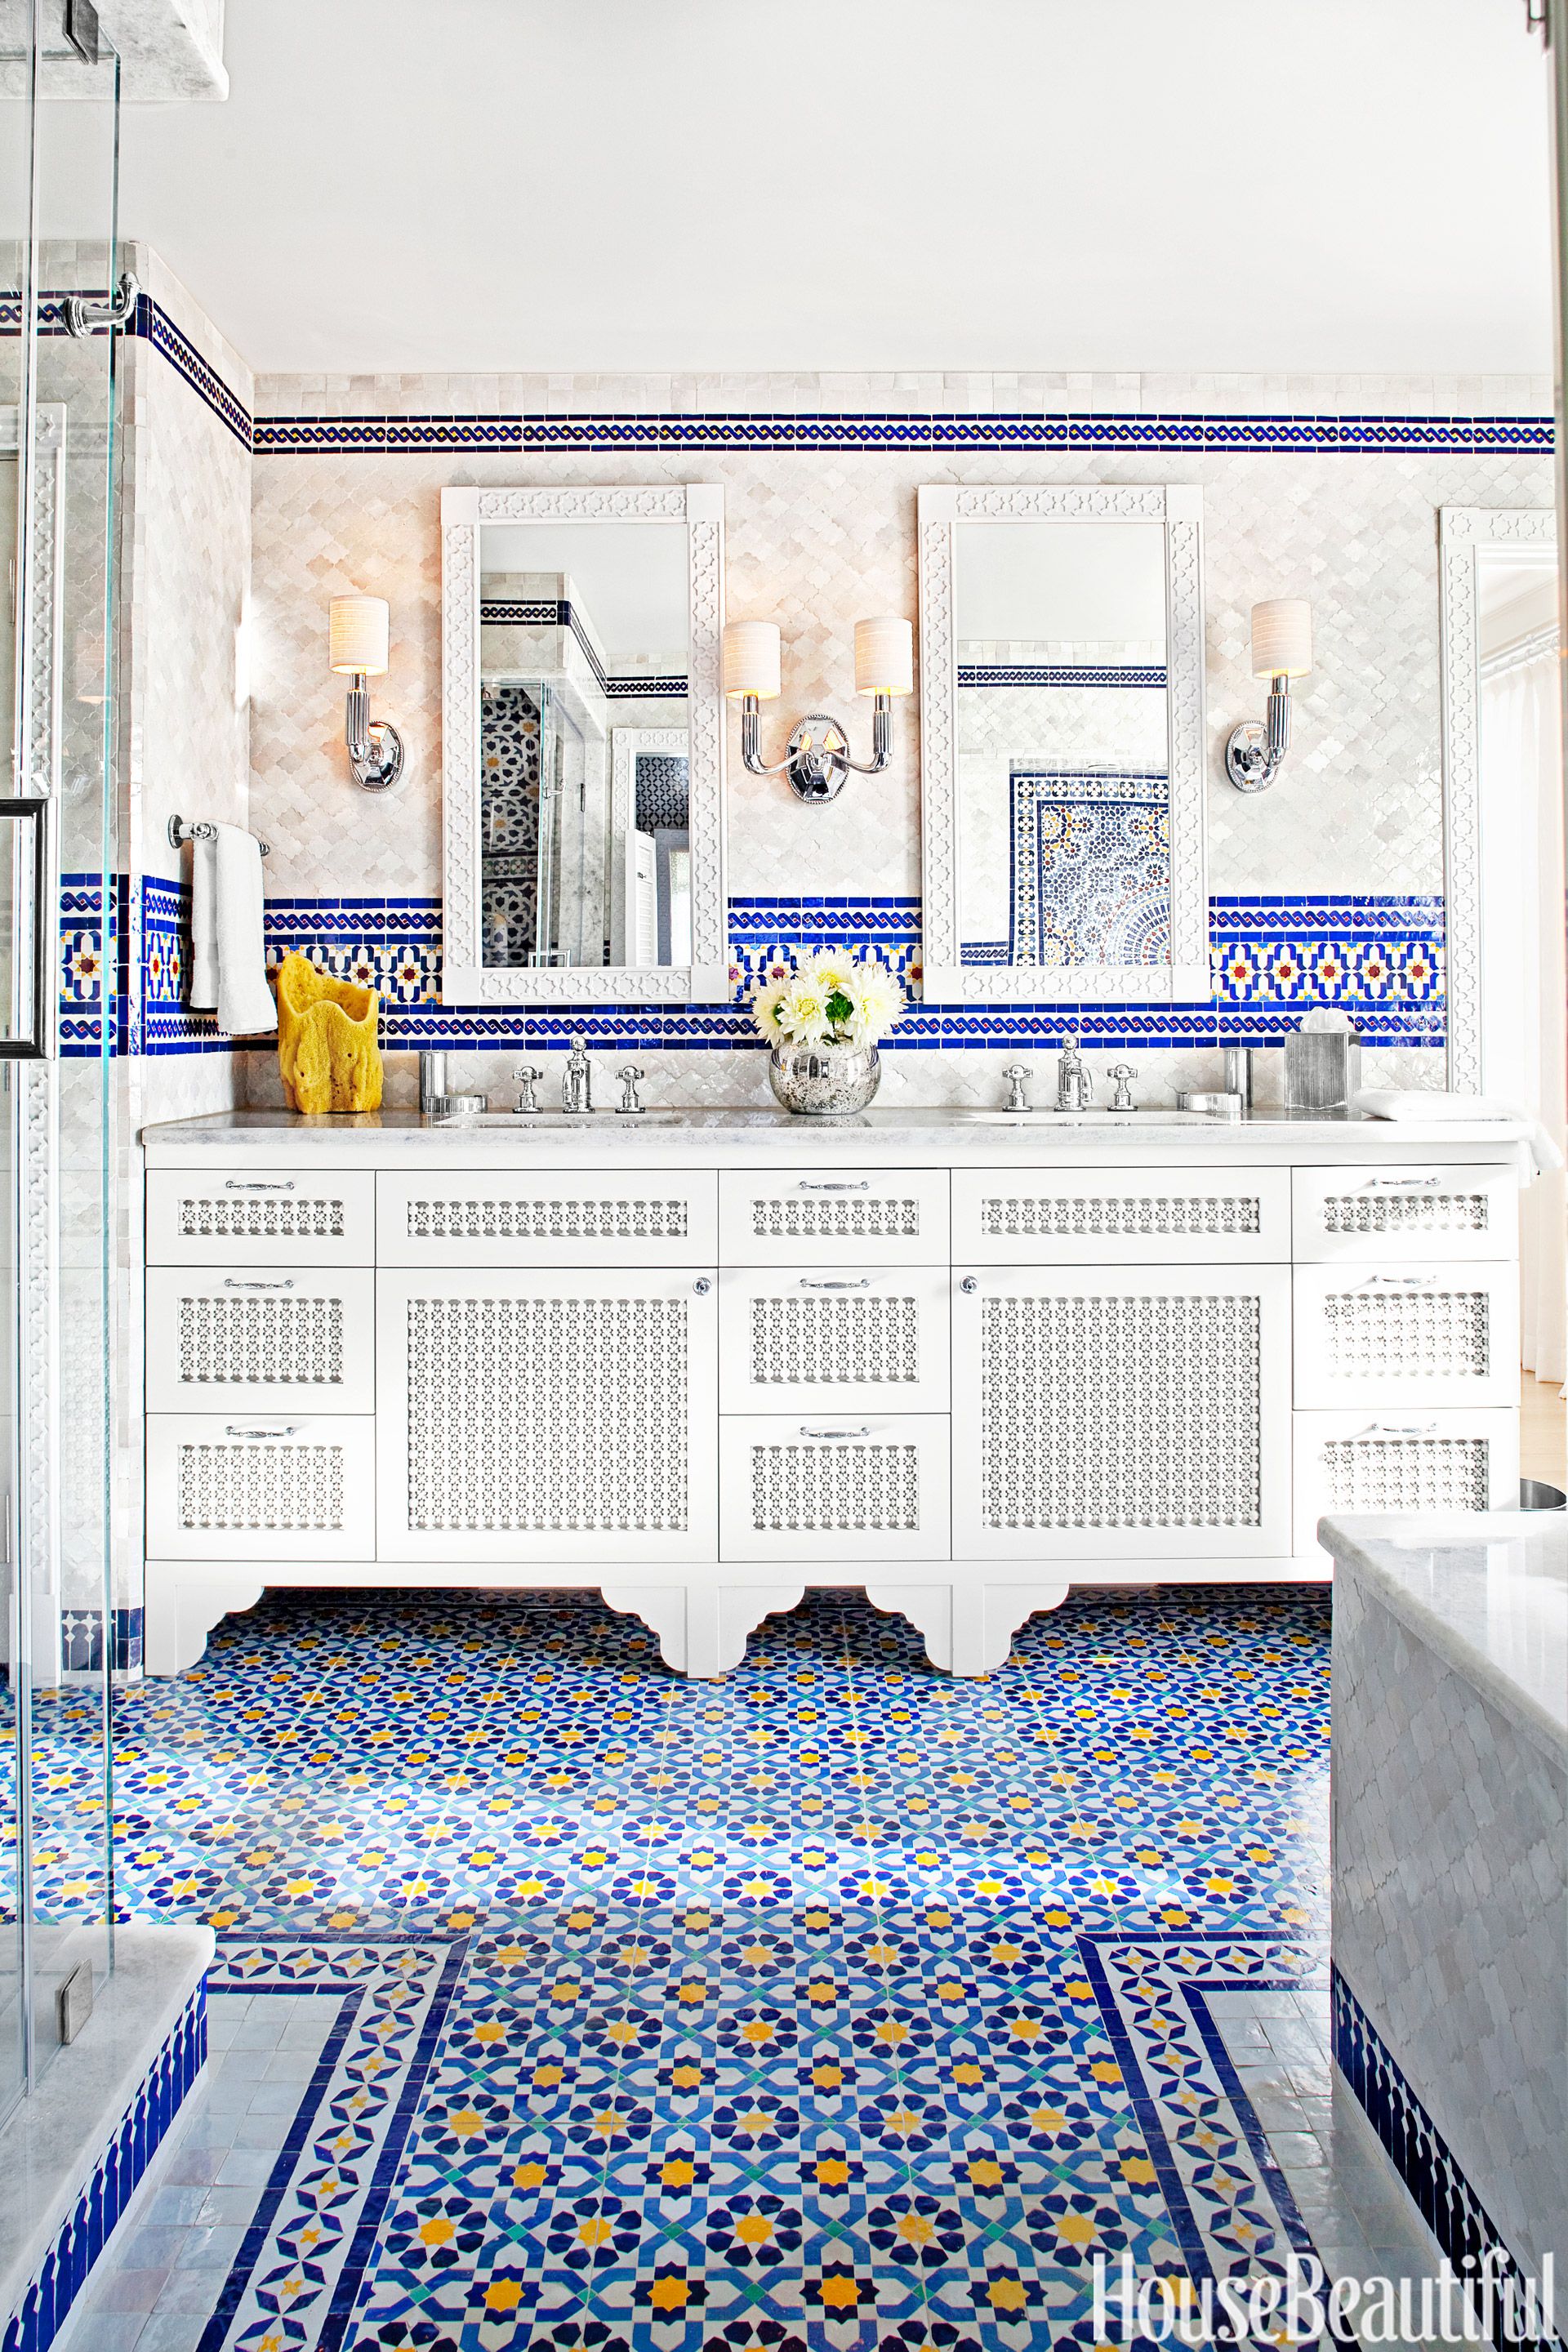 48 Bathroom Tile Design Ideas - Tile Backsplash and Floor Designs ...